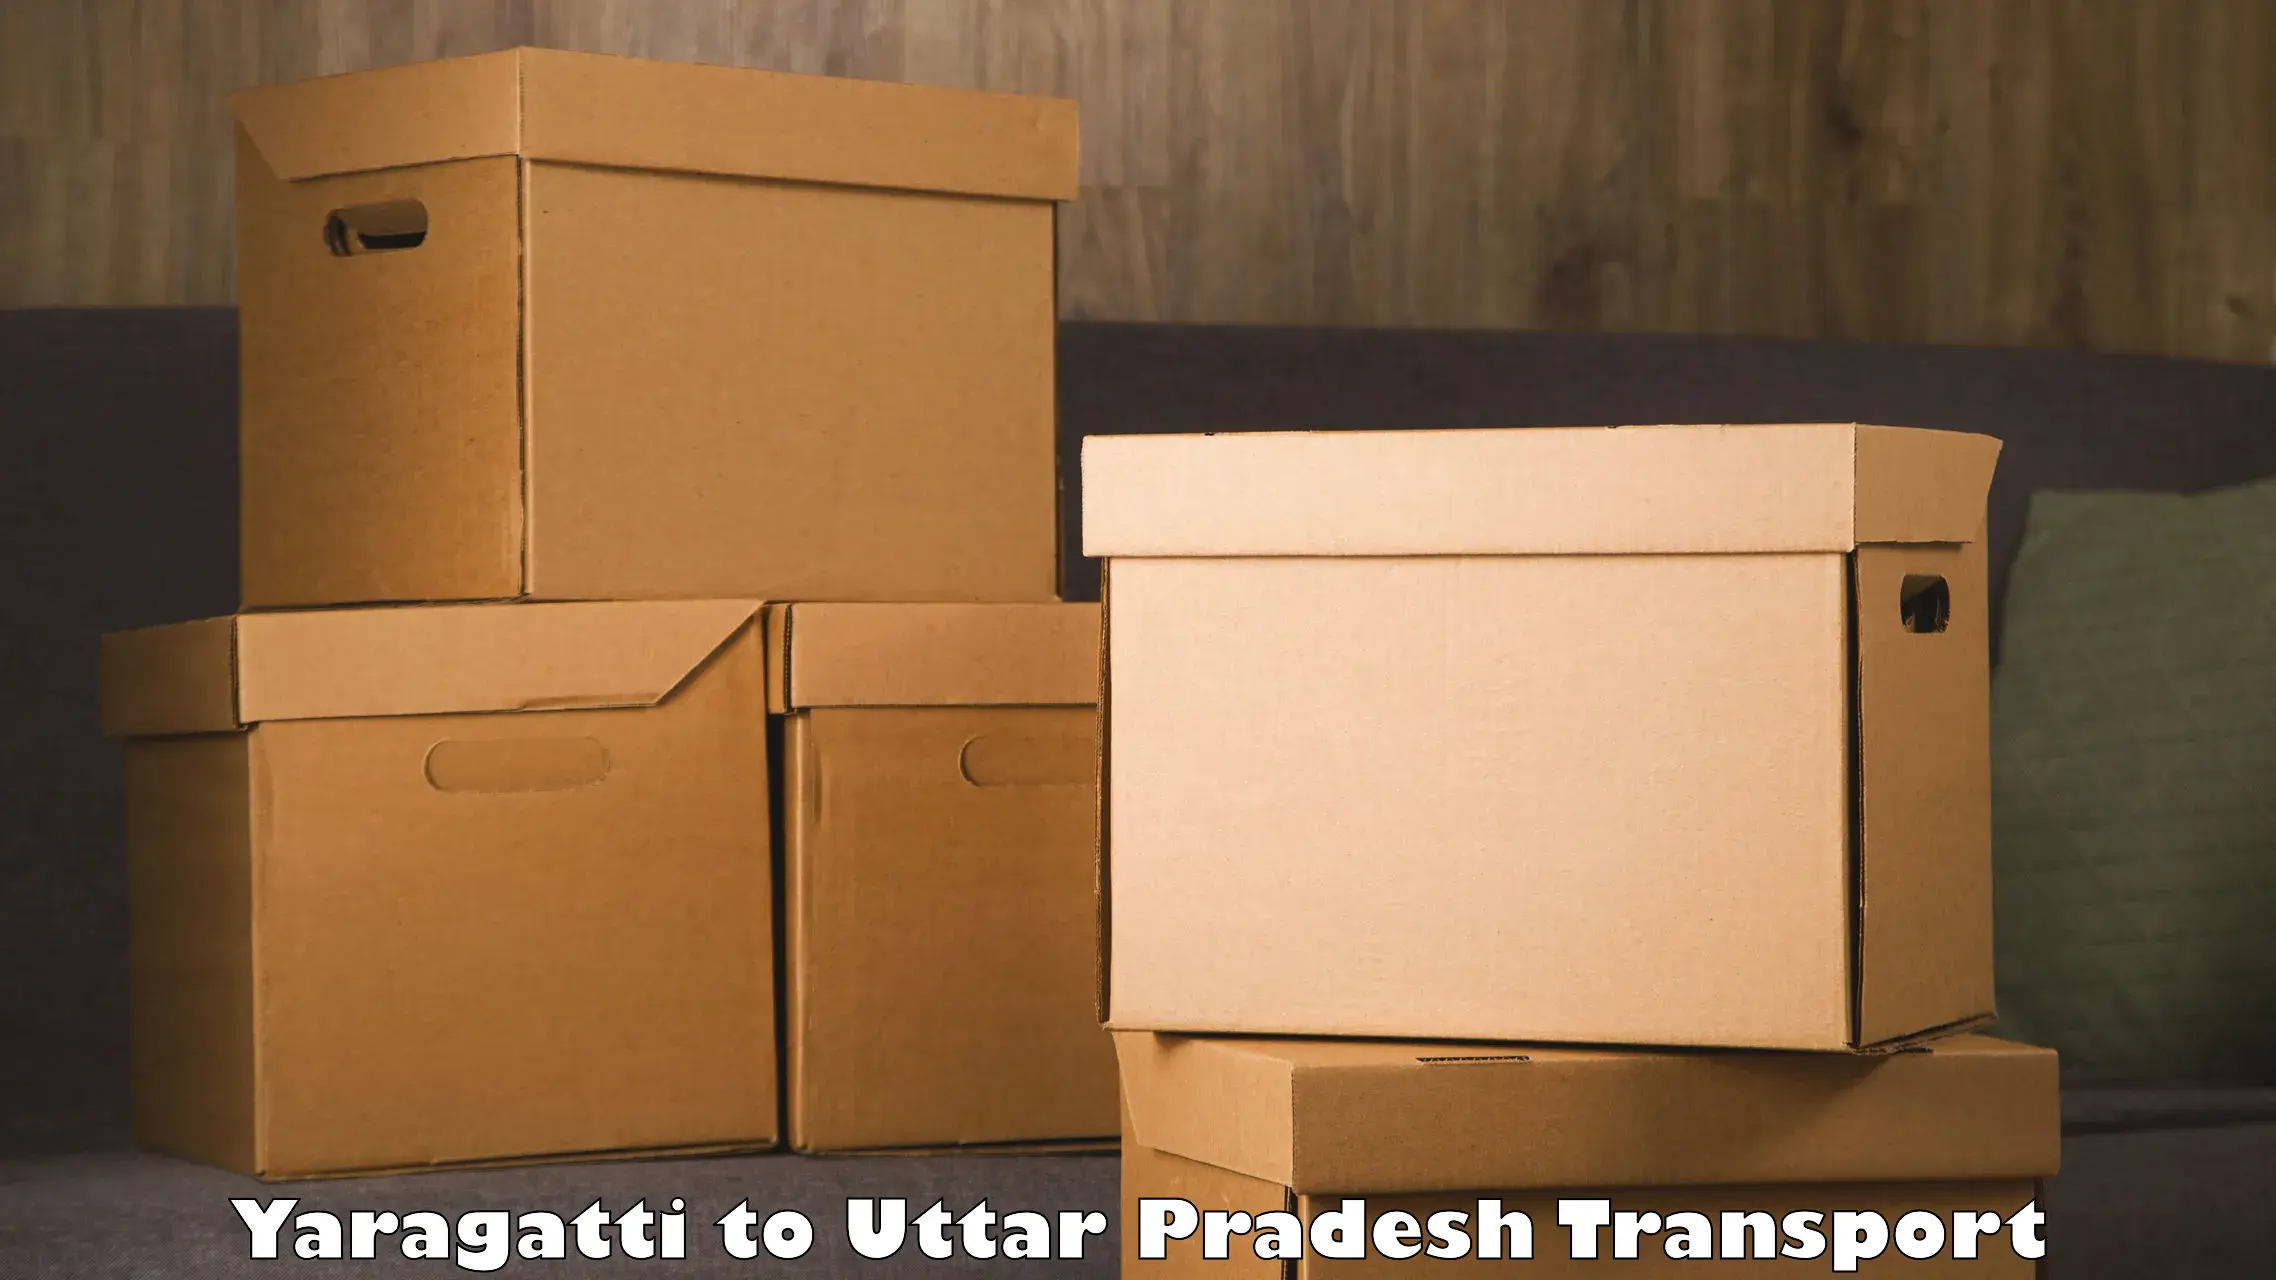 Truck transport companies in India Yaragatti to Hardoi